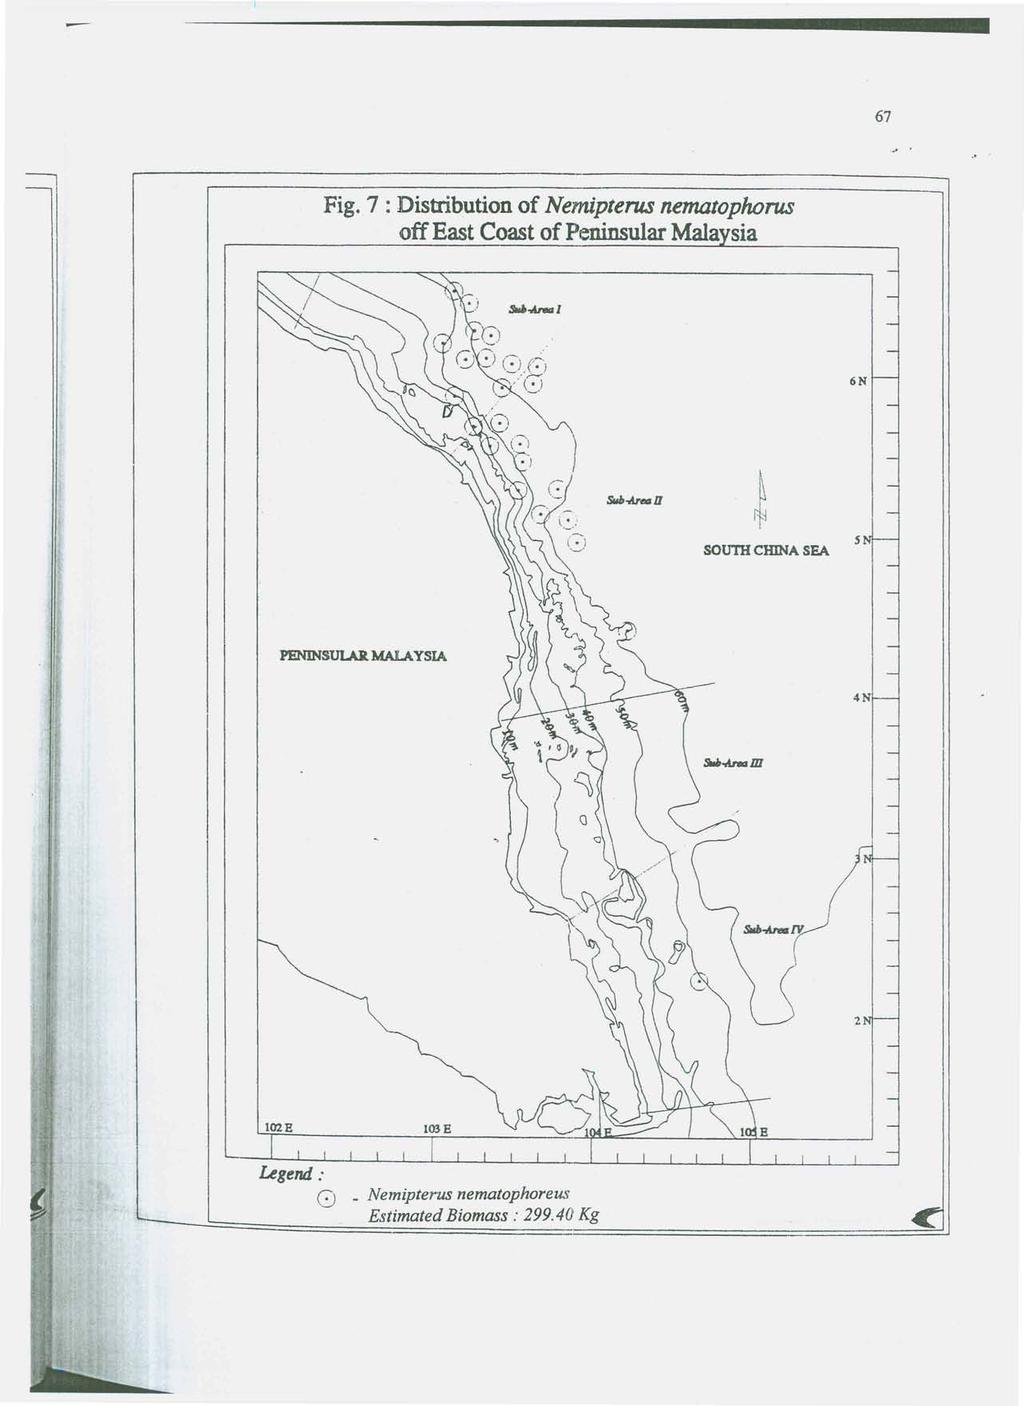 Fig. 7 : Distribution of Nemipterus nematophorus off East Coast of